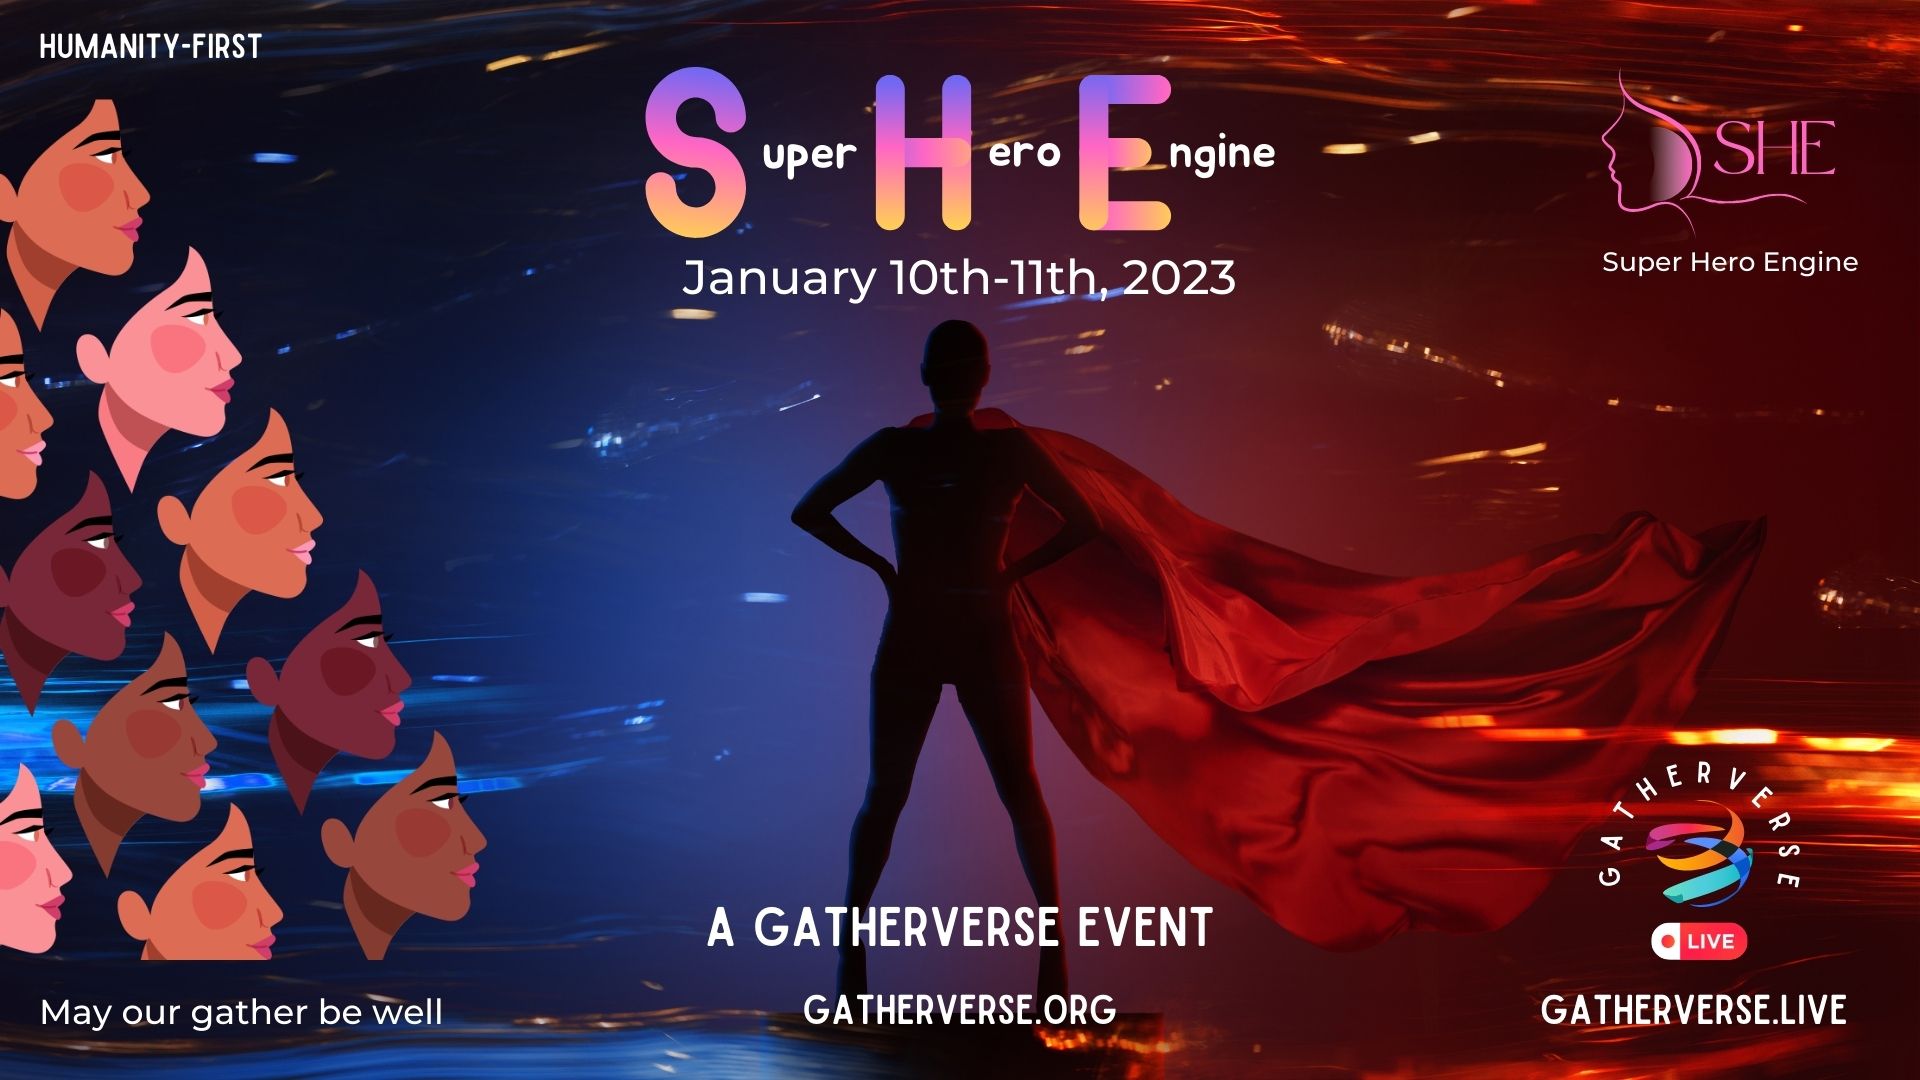 SHE - Super Hero Engine